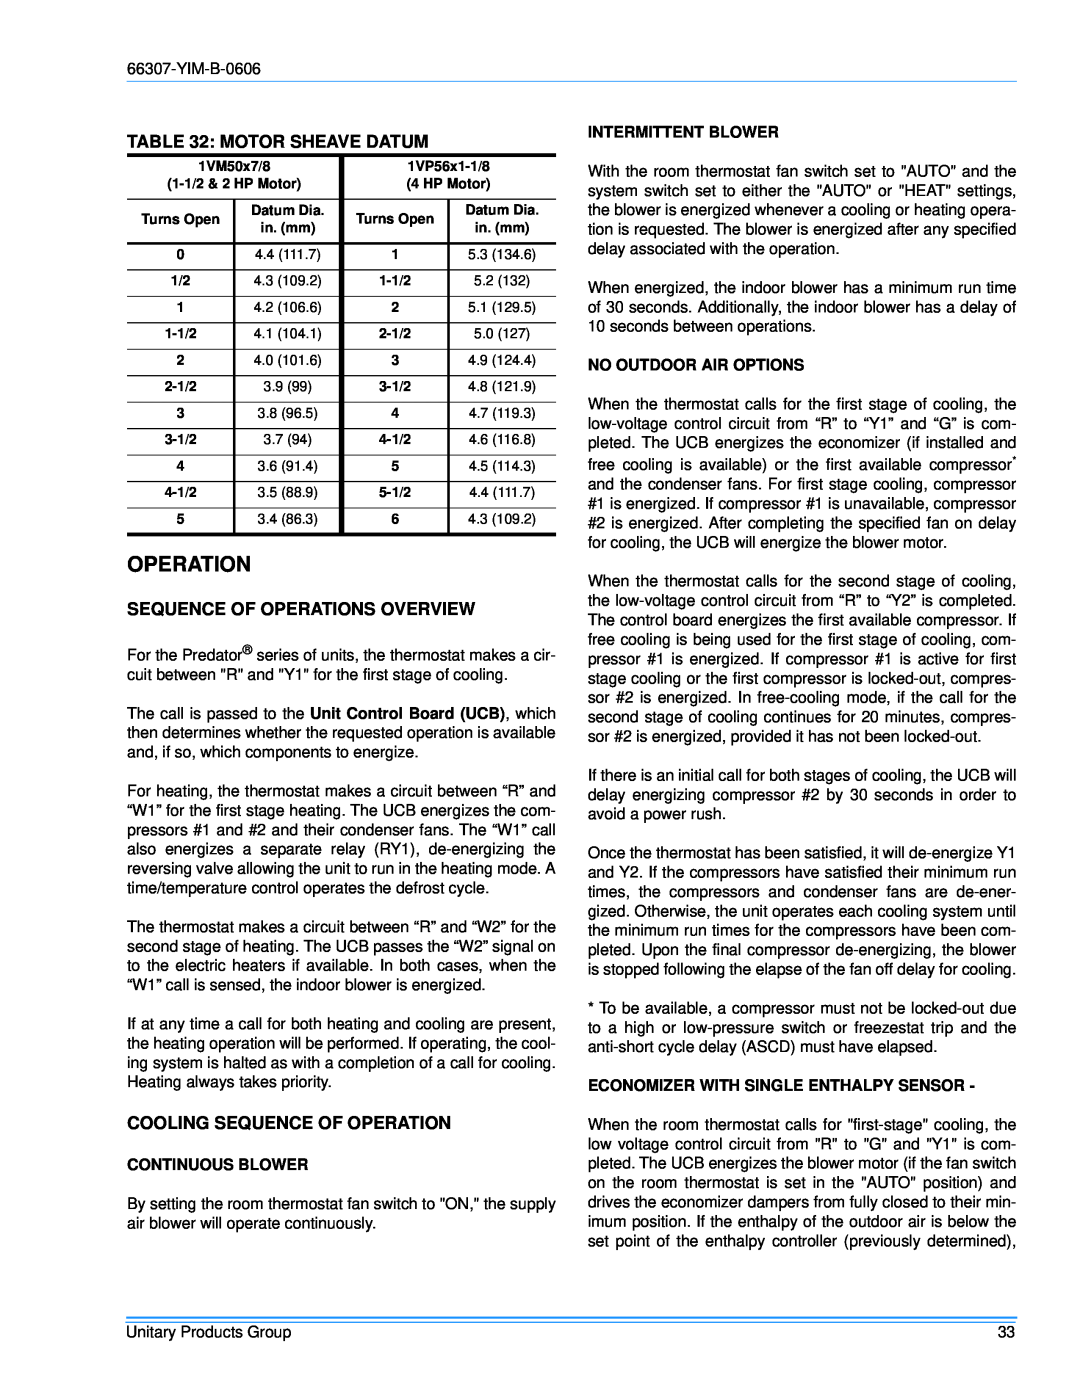 York BP120 Motor Sheave Datum, Sequence Of Operations Overview, Cooling Sequence Of Operation, Continuous Blower 